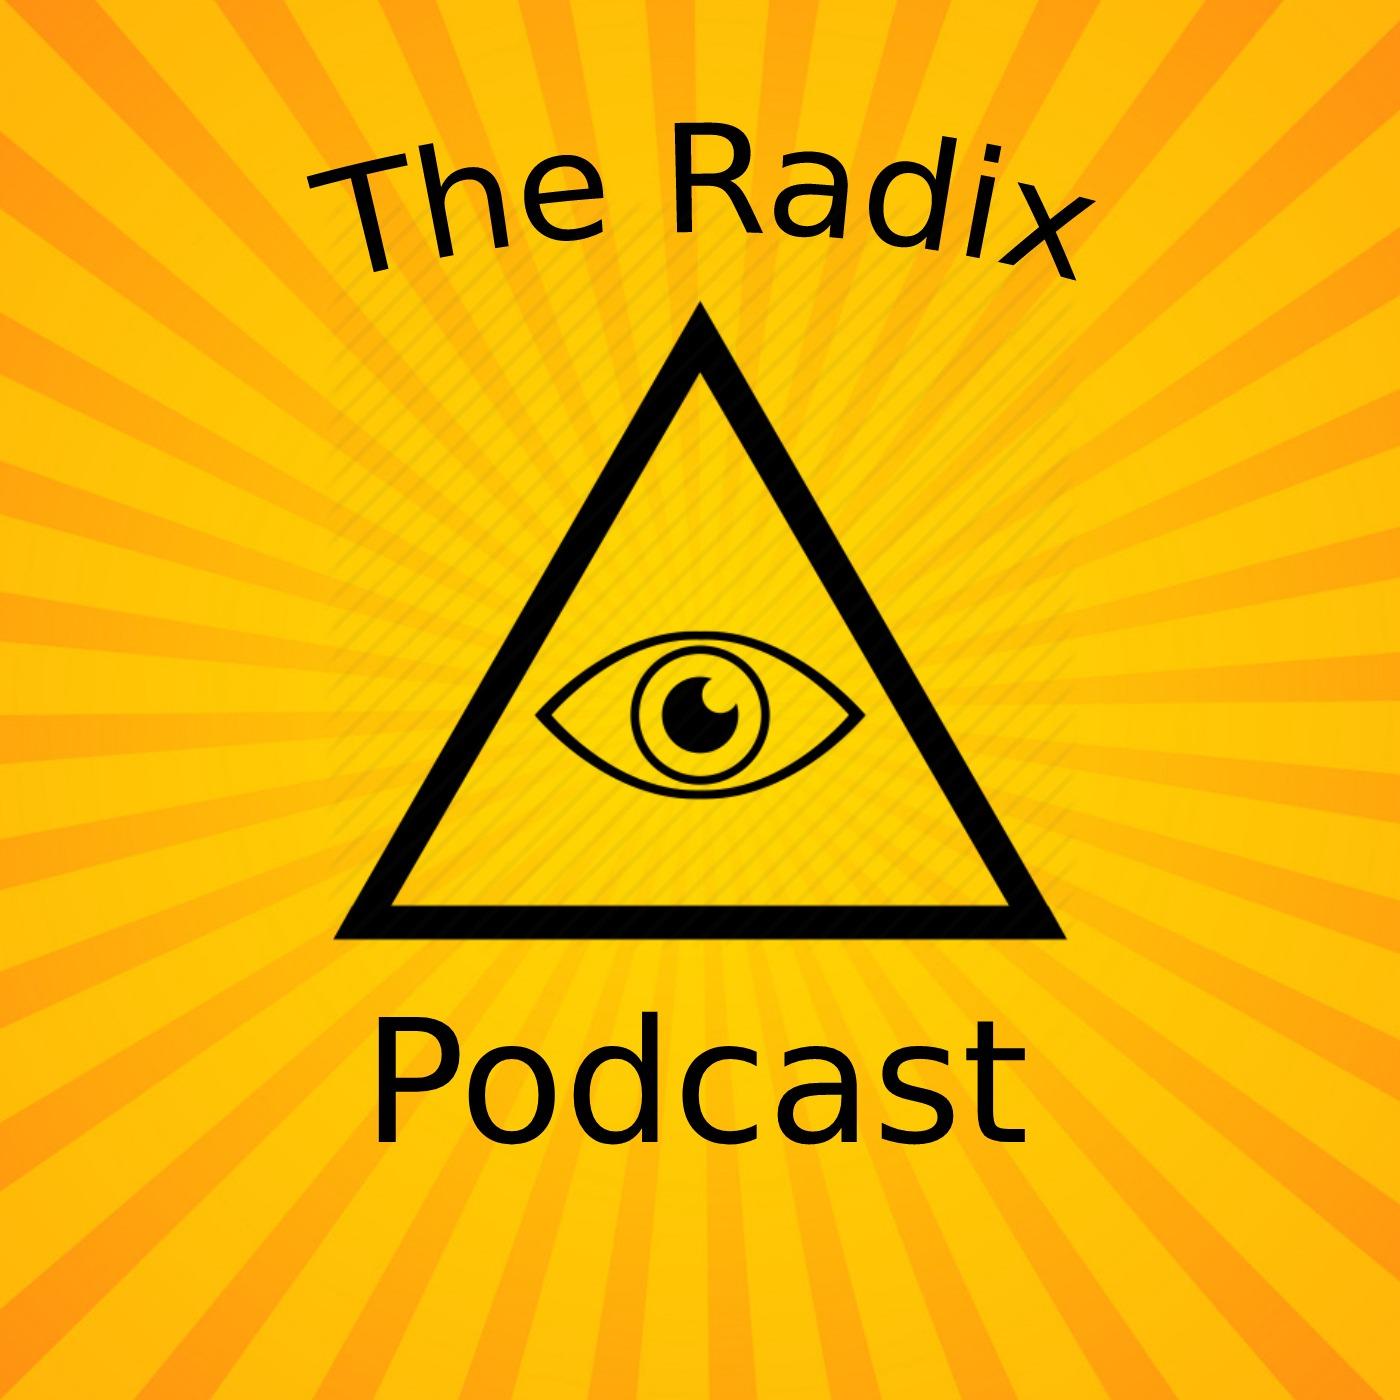 The Radix Podcast